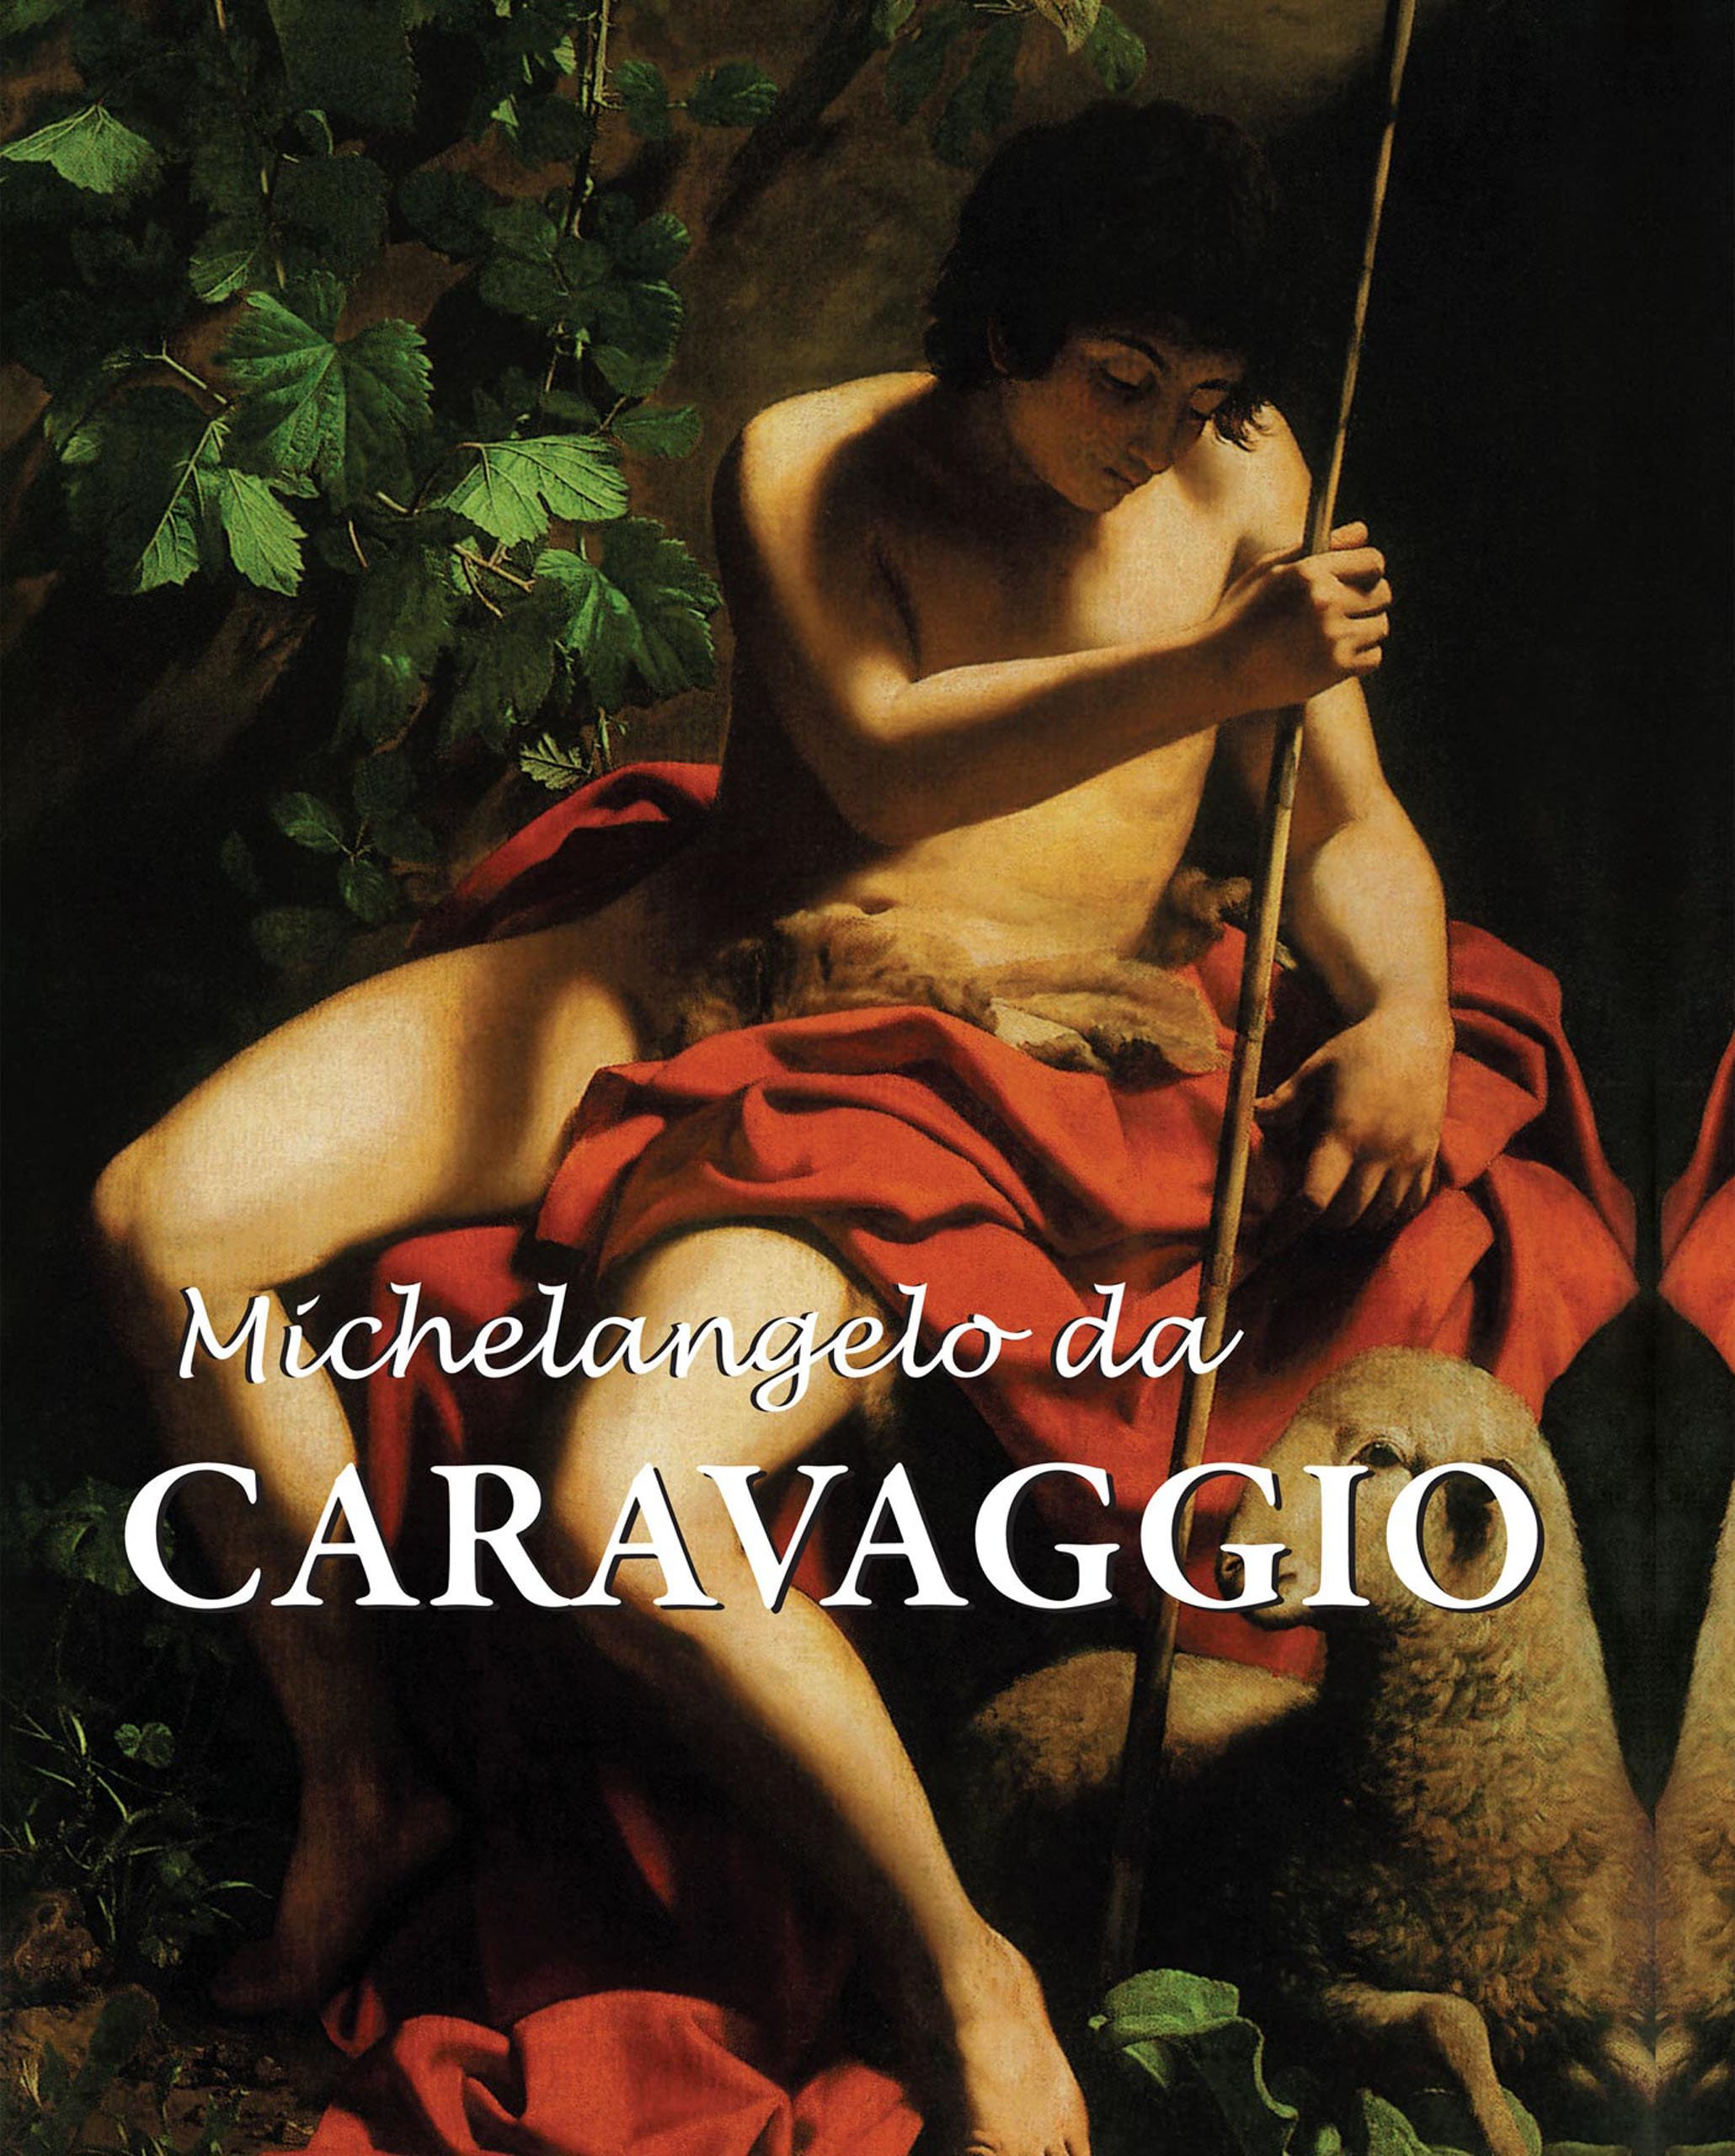 Michelangelo da Caravaggio (German Edition)